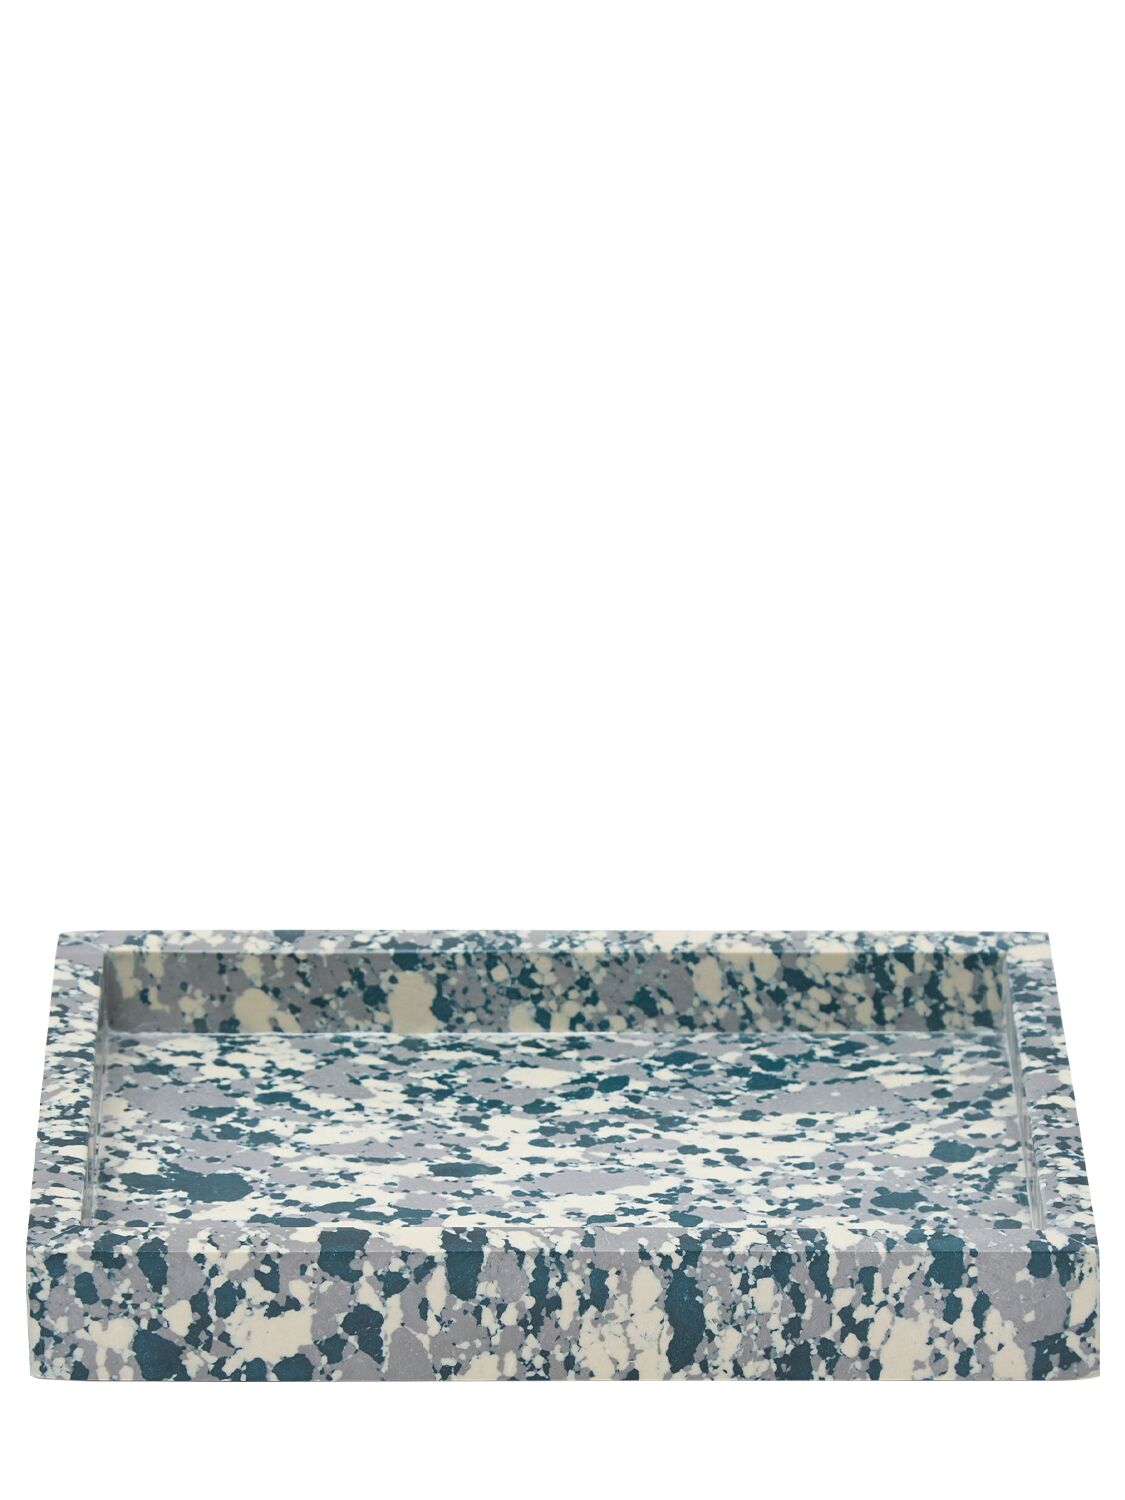 Image of Marbled Teal Blue Desk Tray